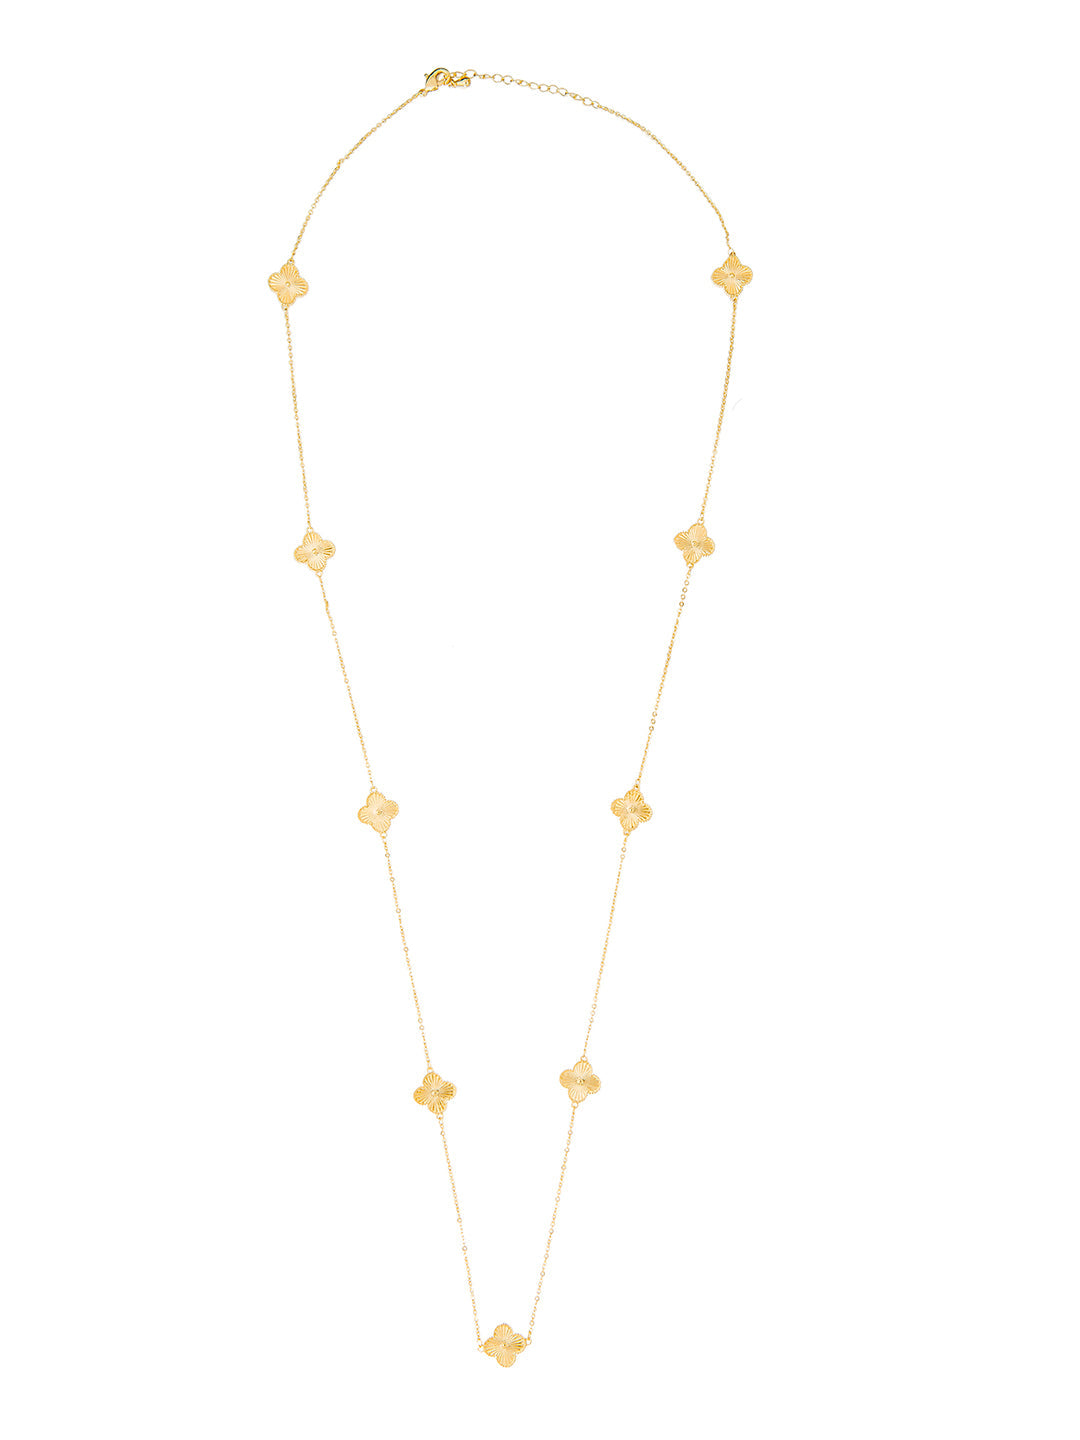 Tiny Hammered Gold Four Leaf Clover Necklace Also in Silver - Etsy | Four  leaf clover necklace, Silver necklaces women, Gold fashion necklace